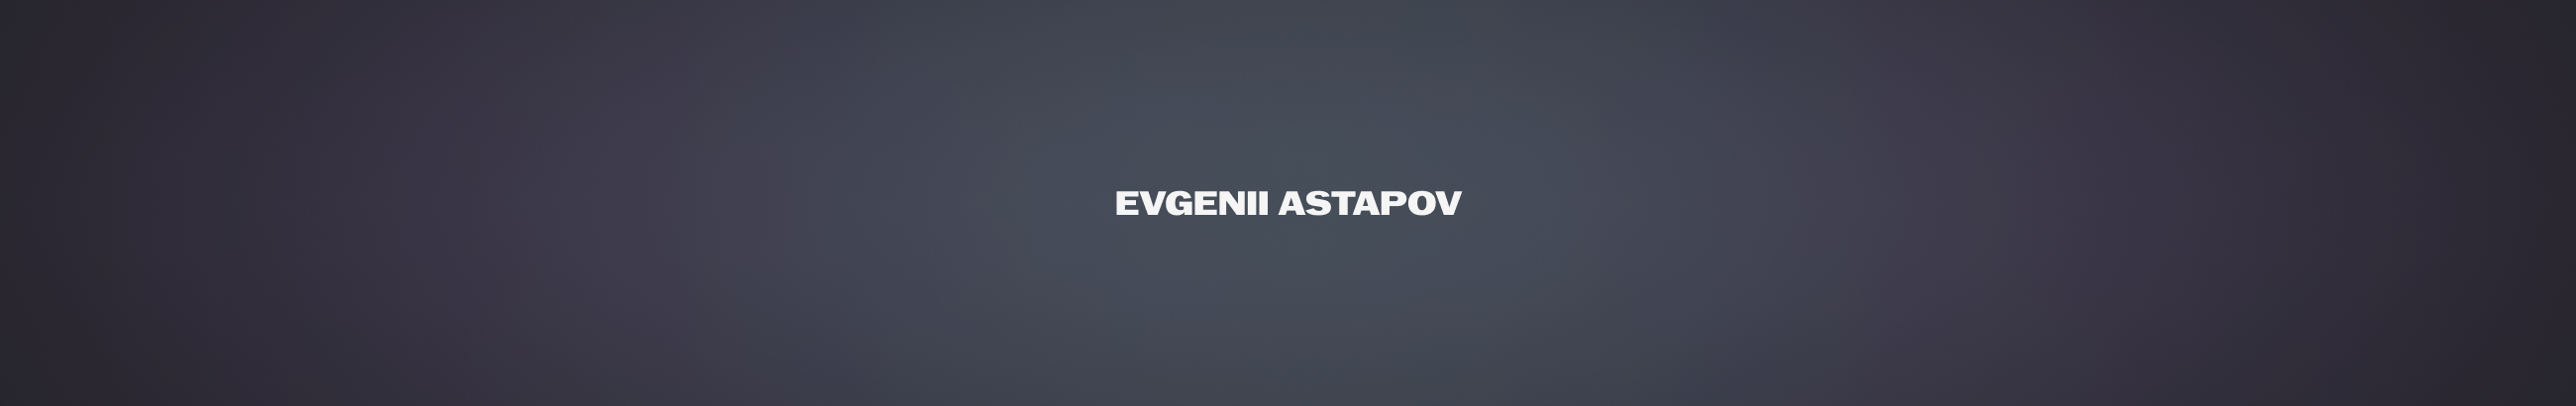 Evgenii Astapov's profile banner